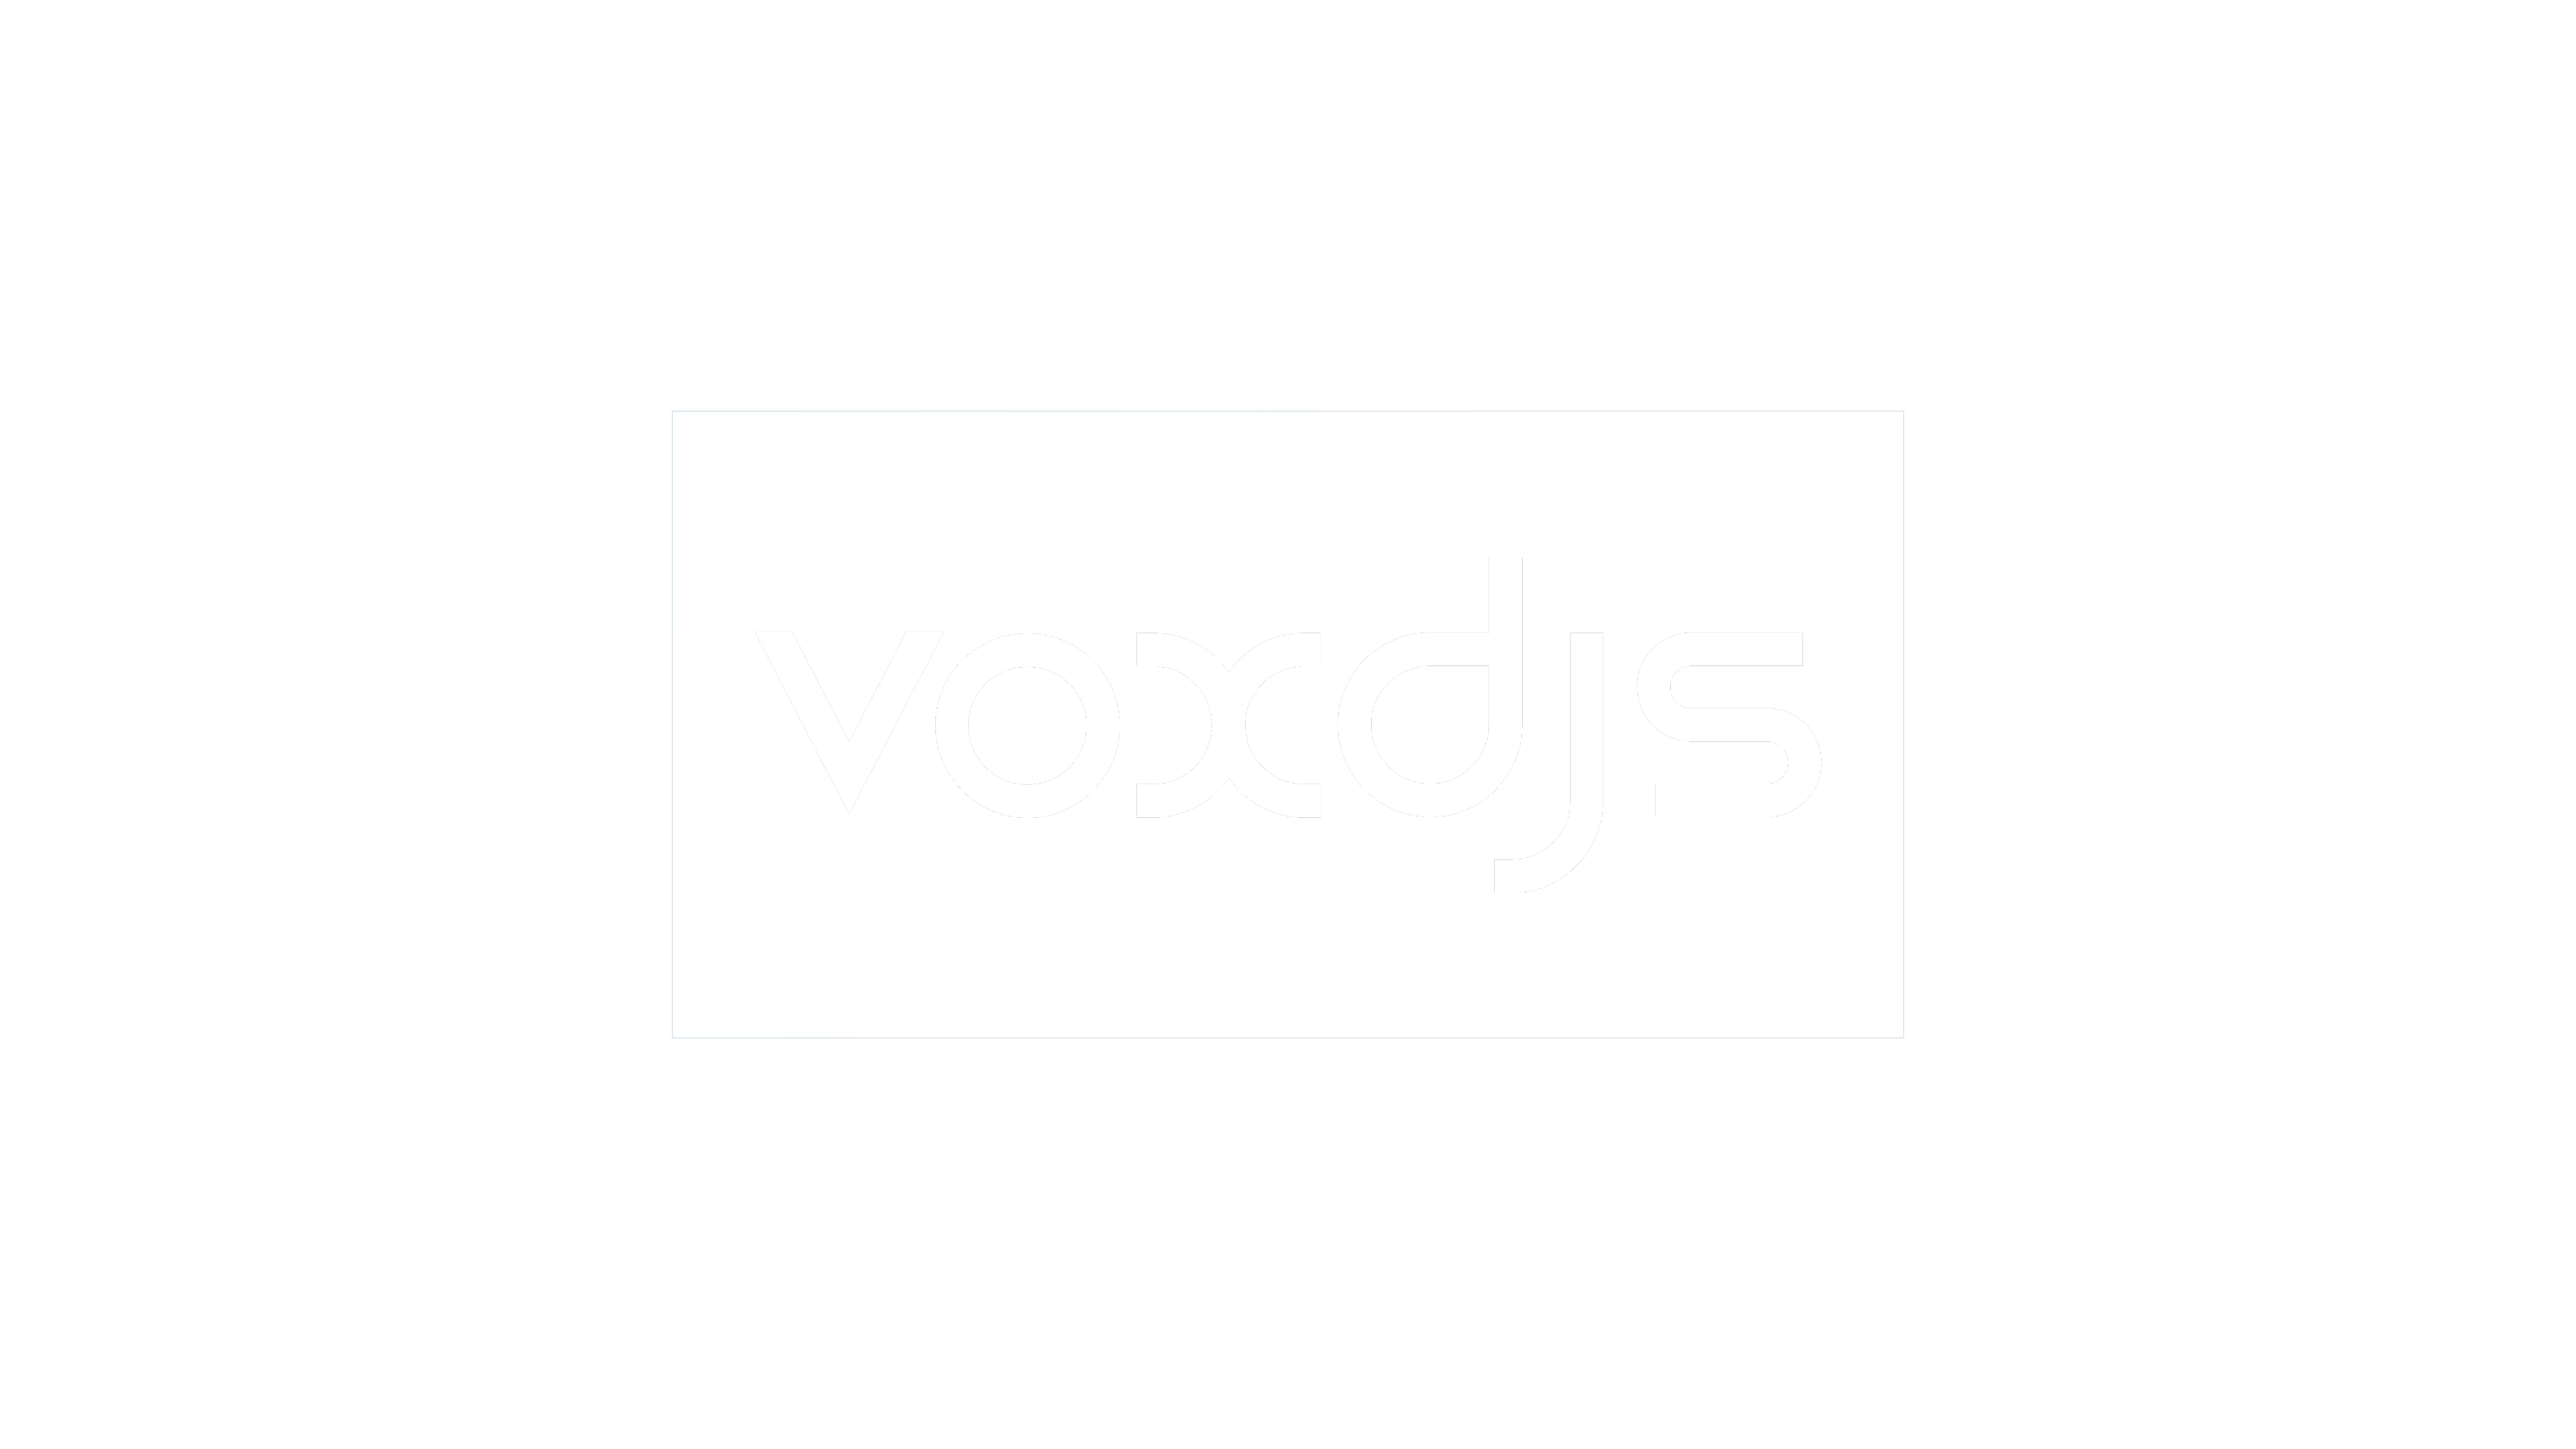 Vox DJs